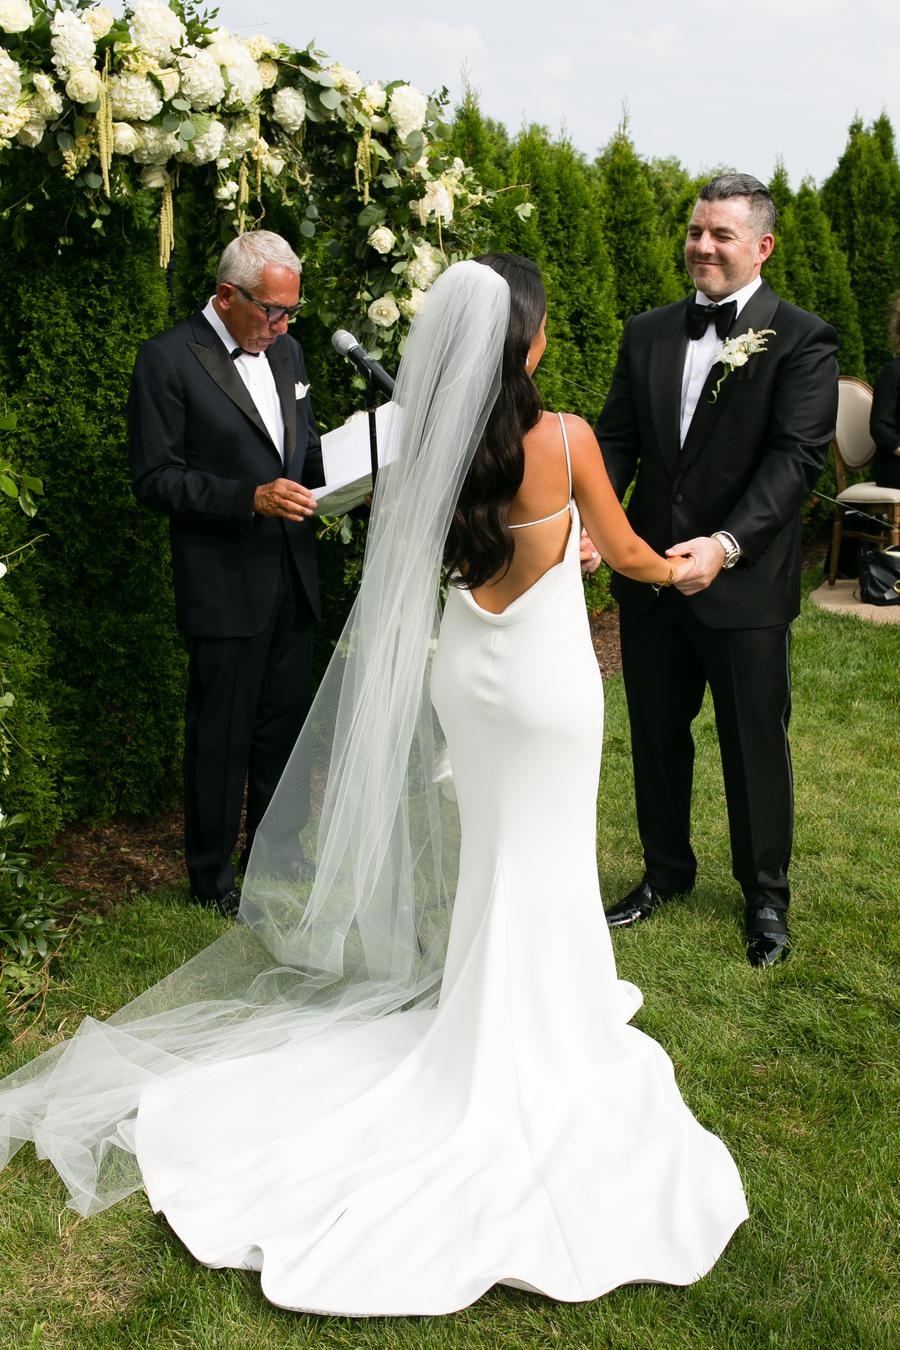 Spaghetti Straps Simple Wedding Dresses, Cheap Wedding Dresses, Outdoor Wedding Dresses